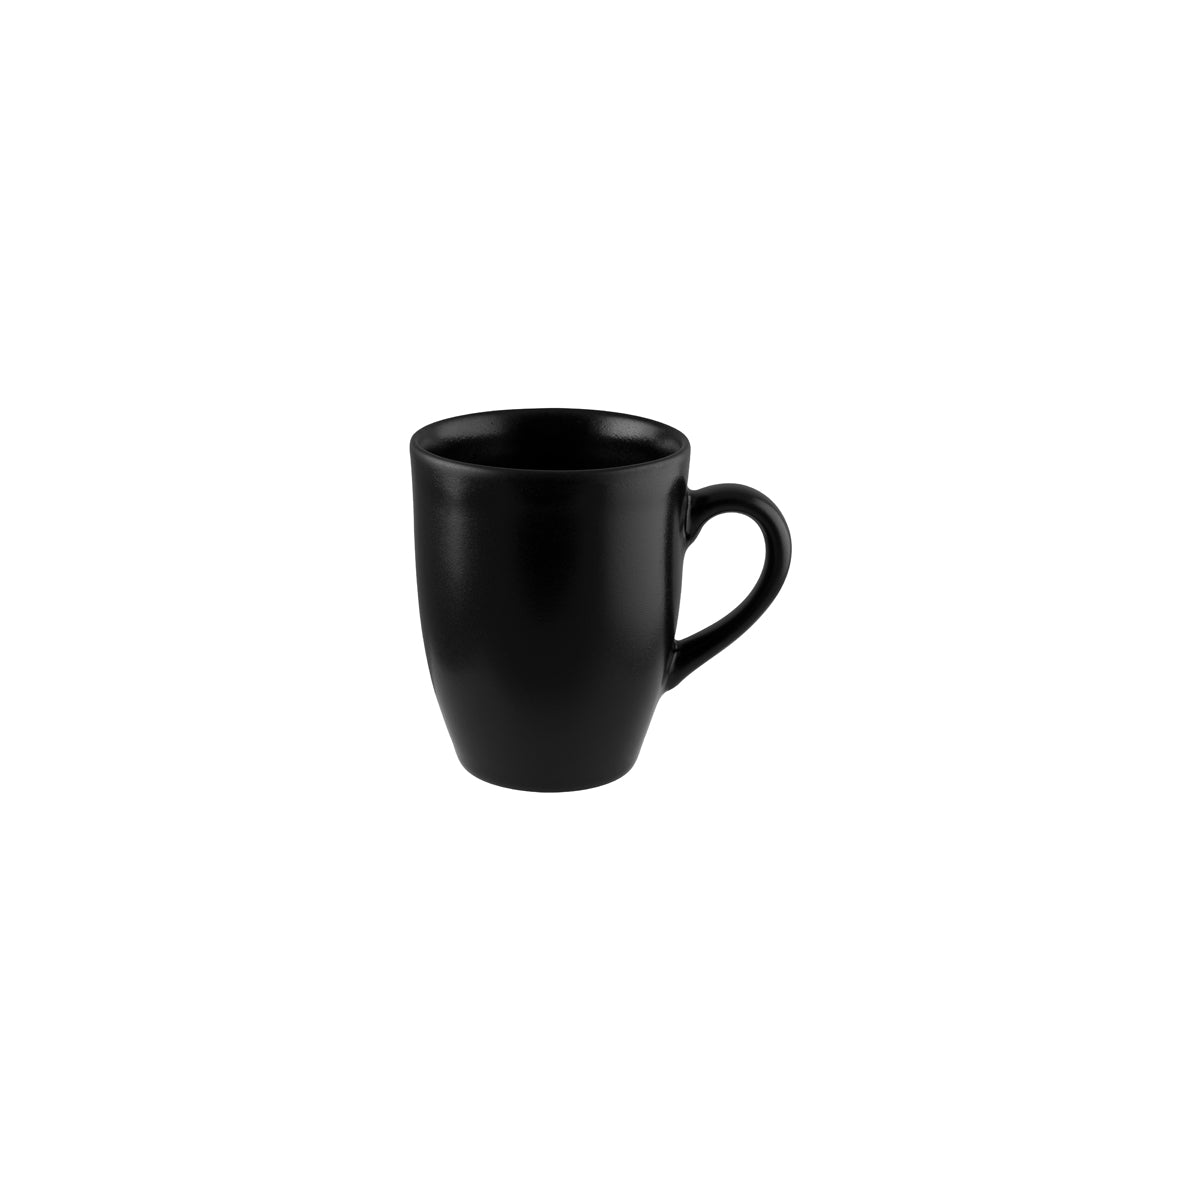 Notte Black Conic Mug 330ml : Pack Of 24